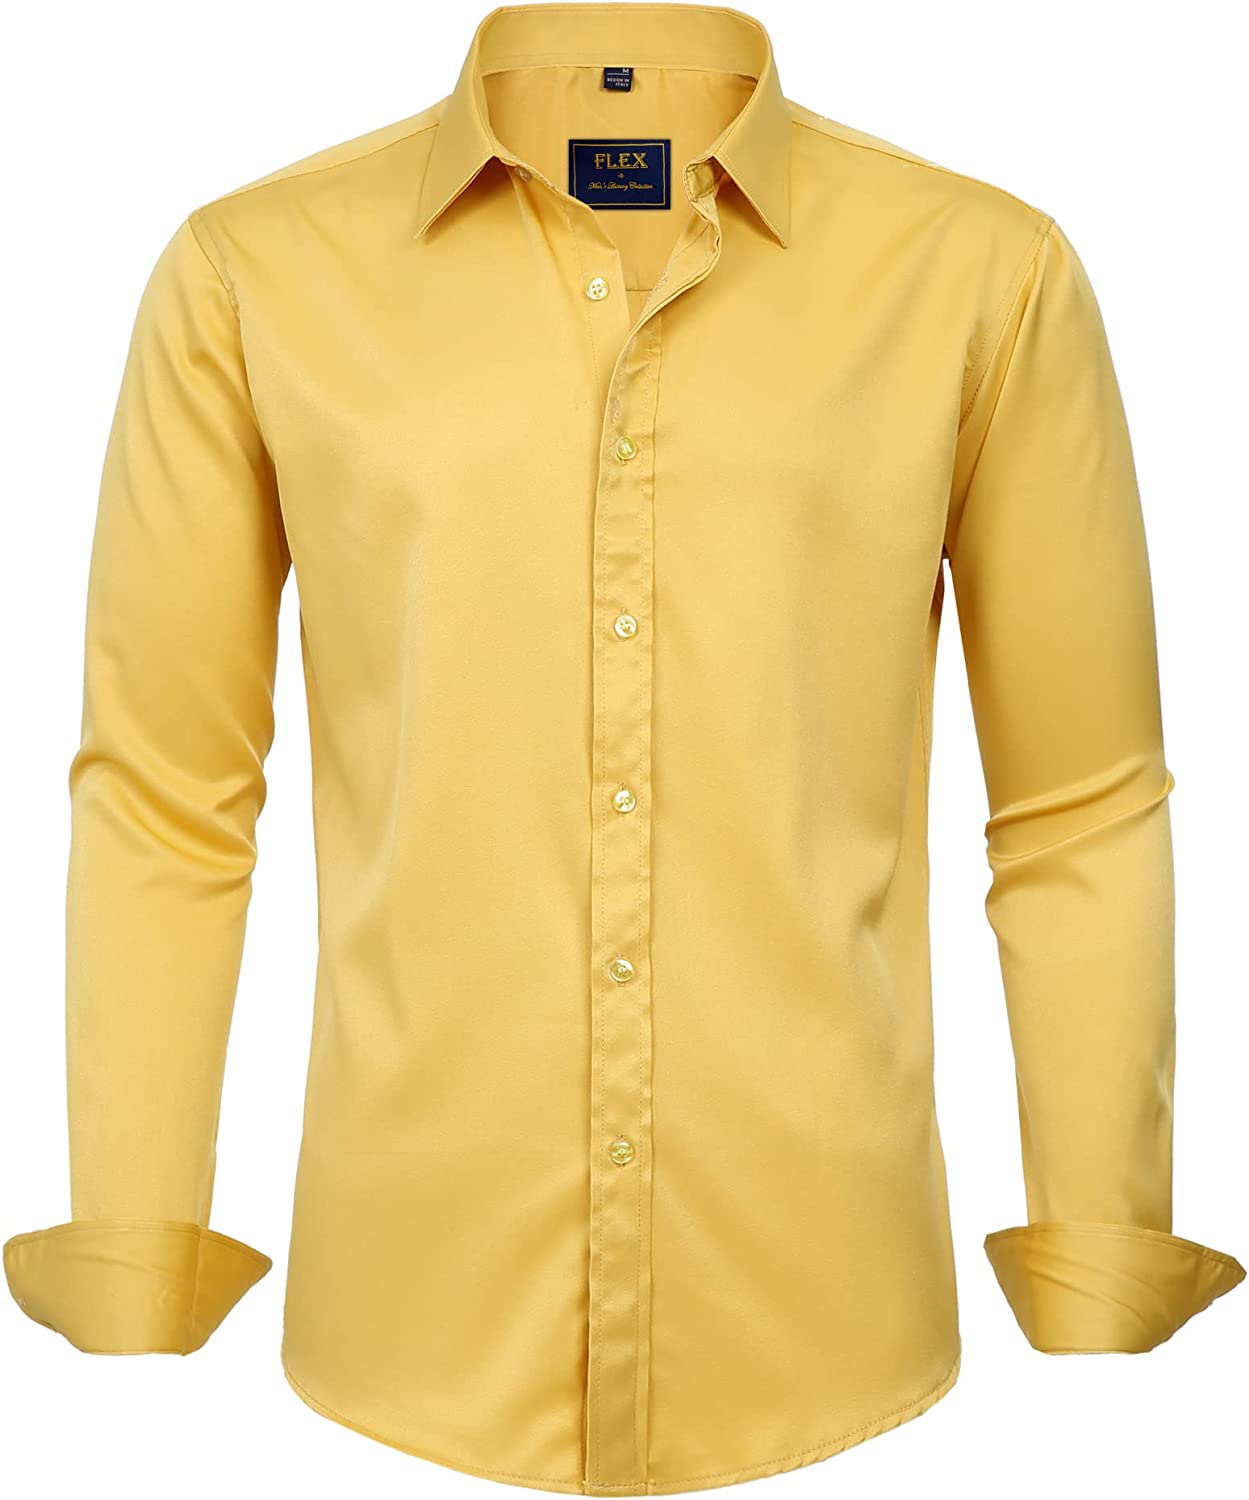 J.VER Mens Business Dress Shirts Regular Fit Solid Color Long Sleeve Spread Collar 